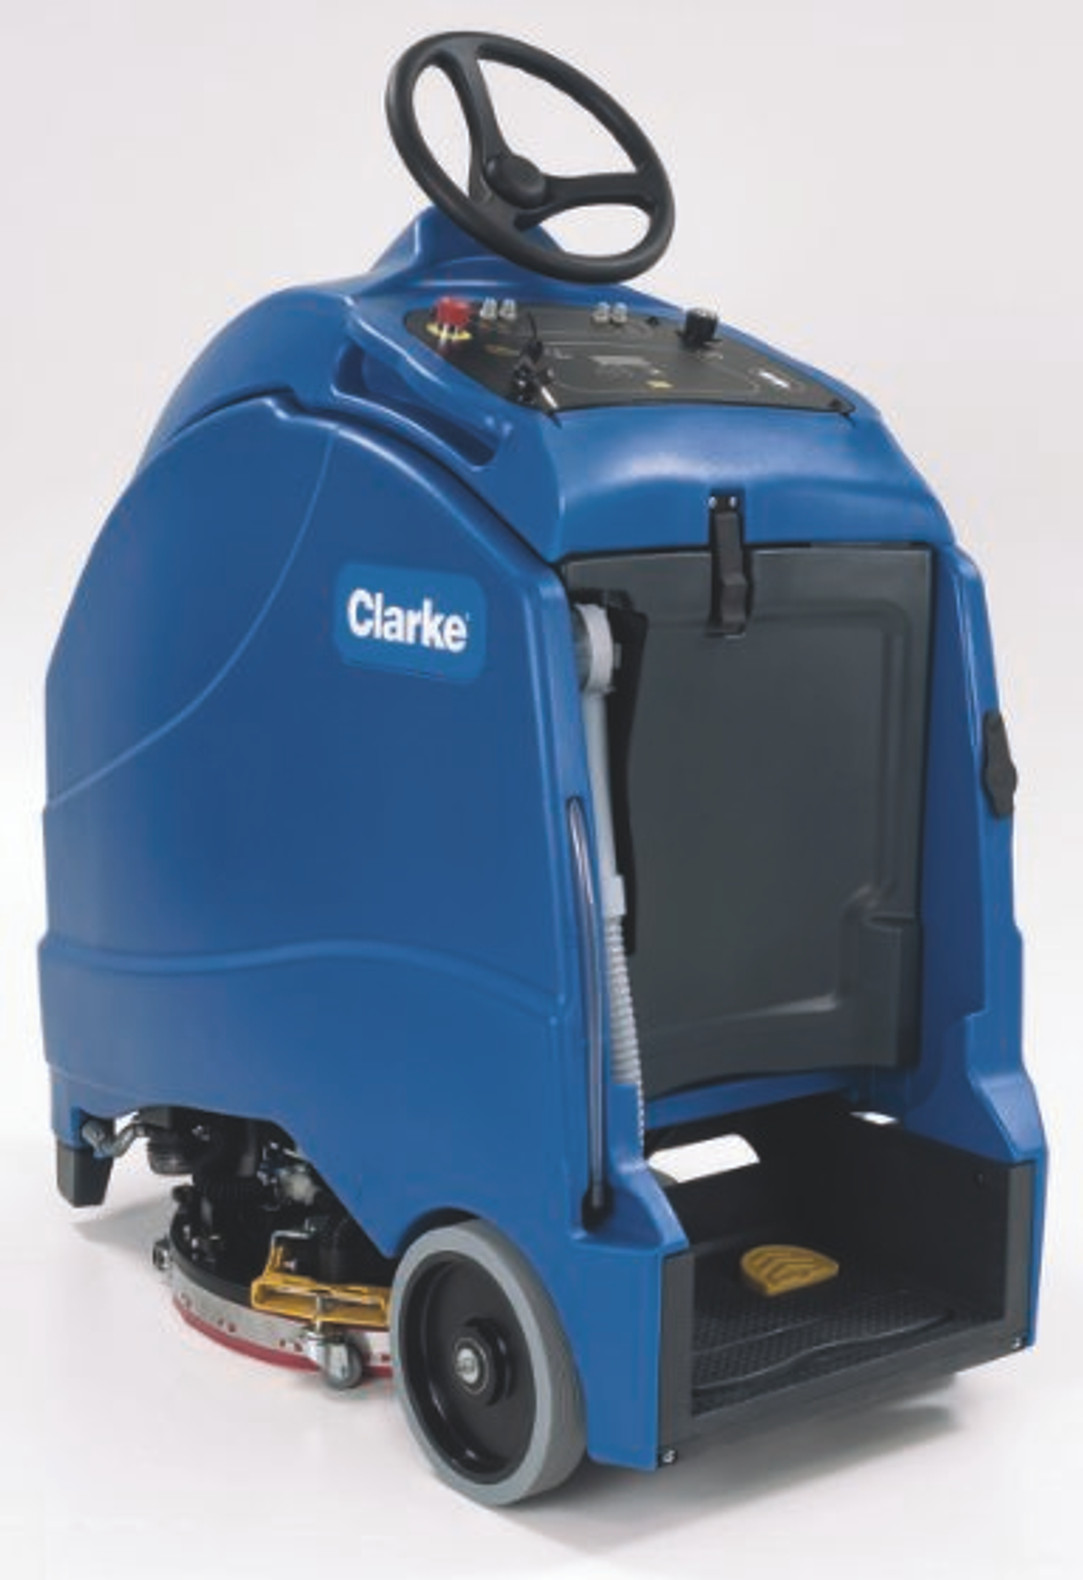 Clarke 56105620 FM40 LX 20 Corded Orbital Floor Scrubber with Baseboard  Cleaner